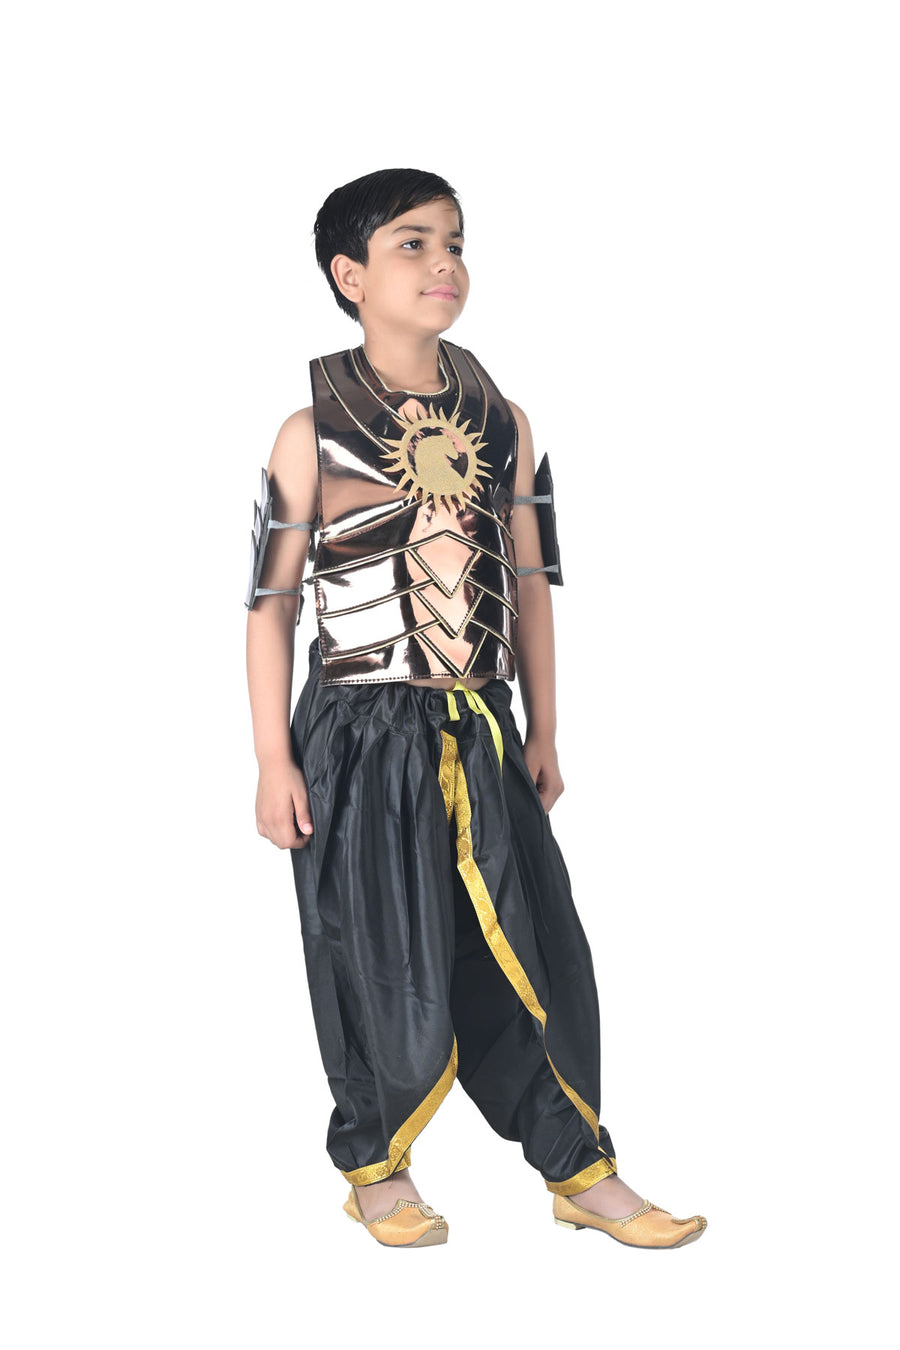 Baahubali Warrior Indian Movies Character Kids & Adults Fancy Dress Costume